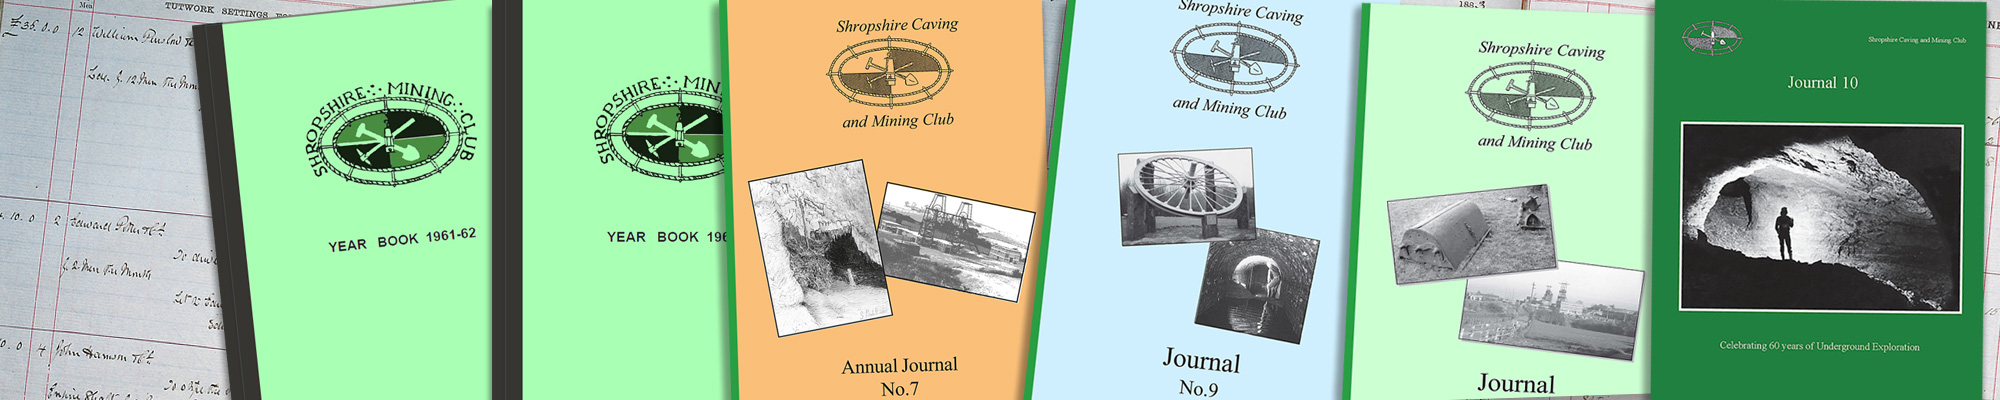 SCMC - Publications & Research, Journals